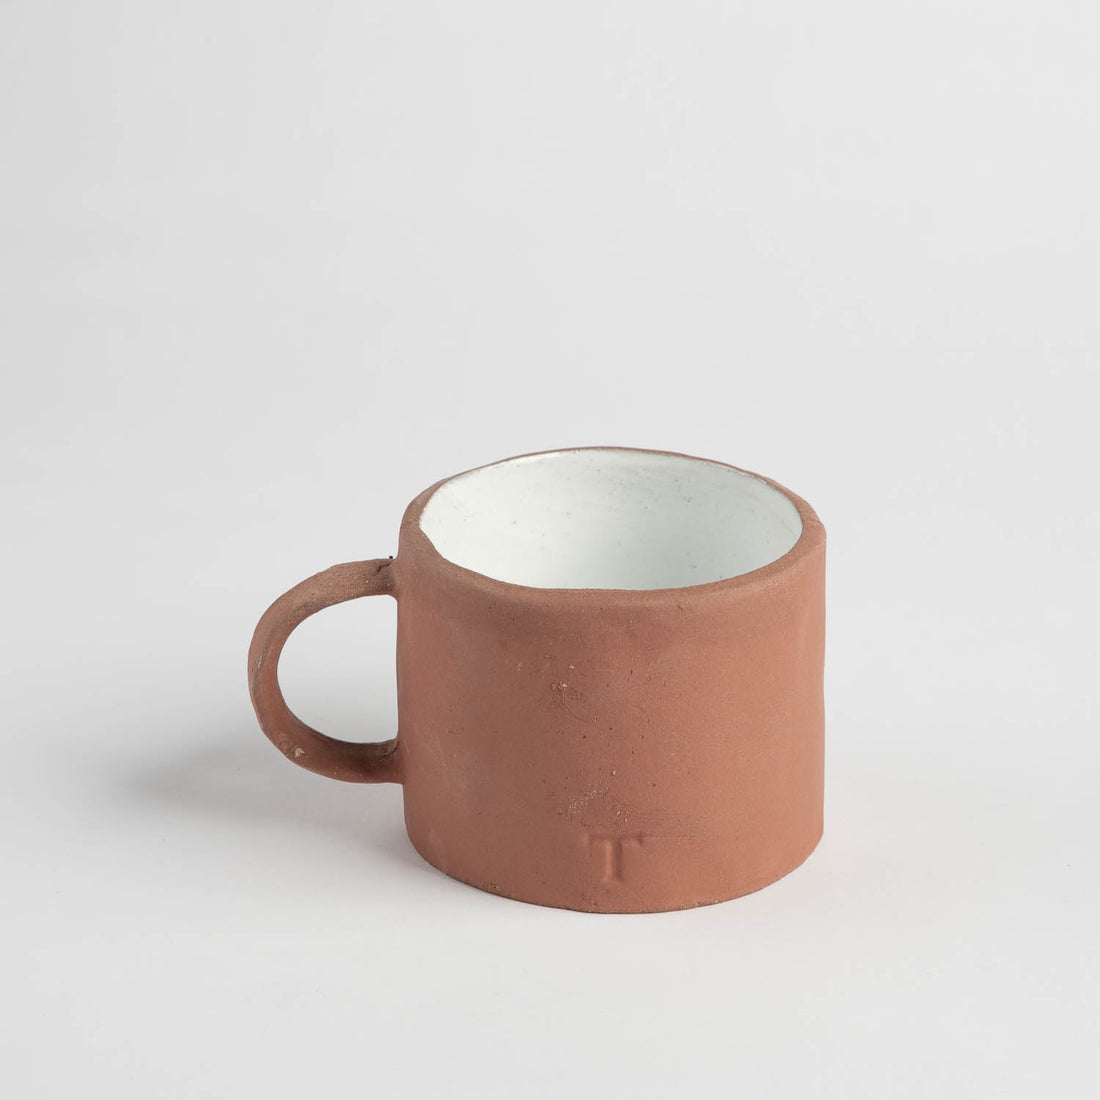 Organic Terracotta Mug (Set of 2)